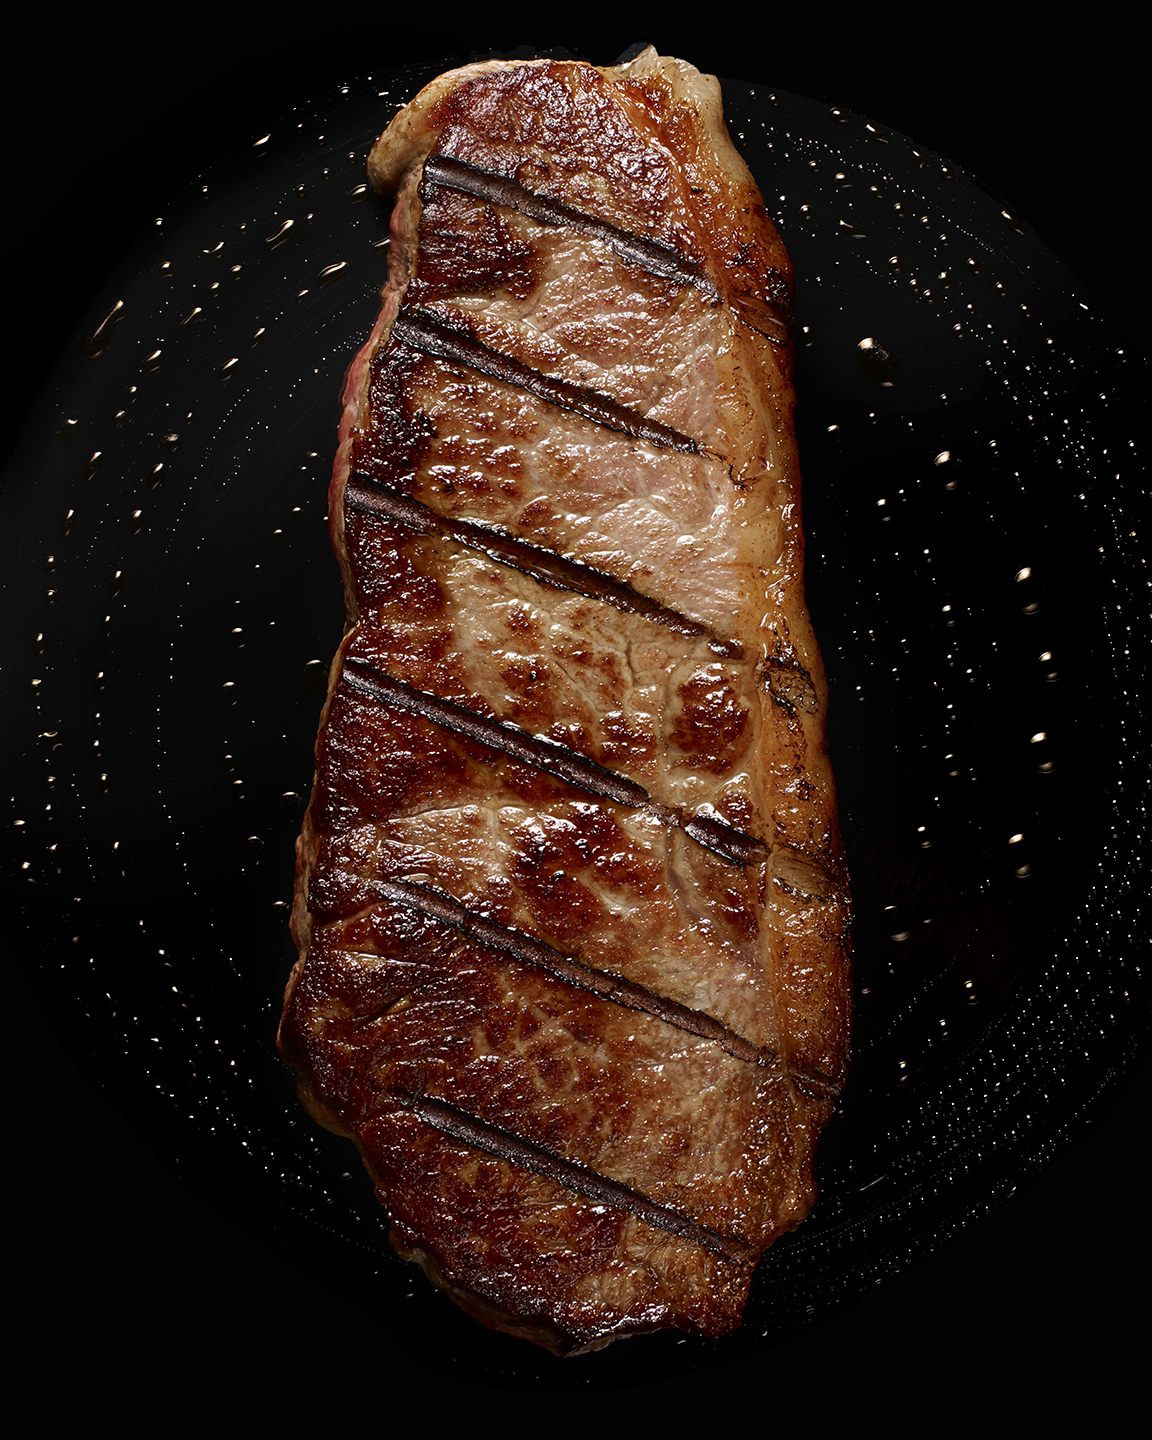 Steak 001b